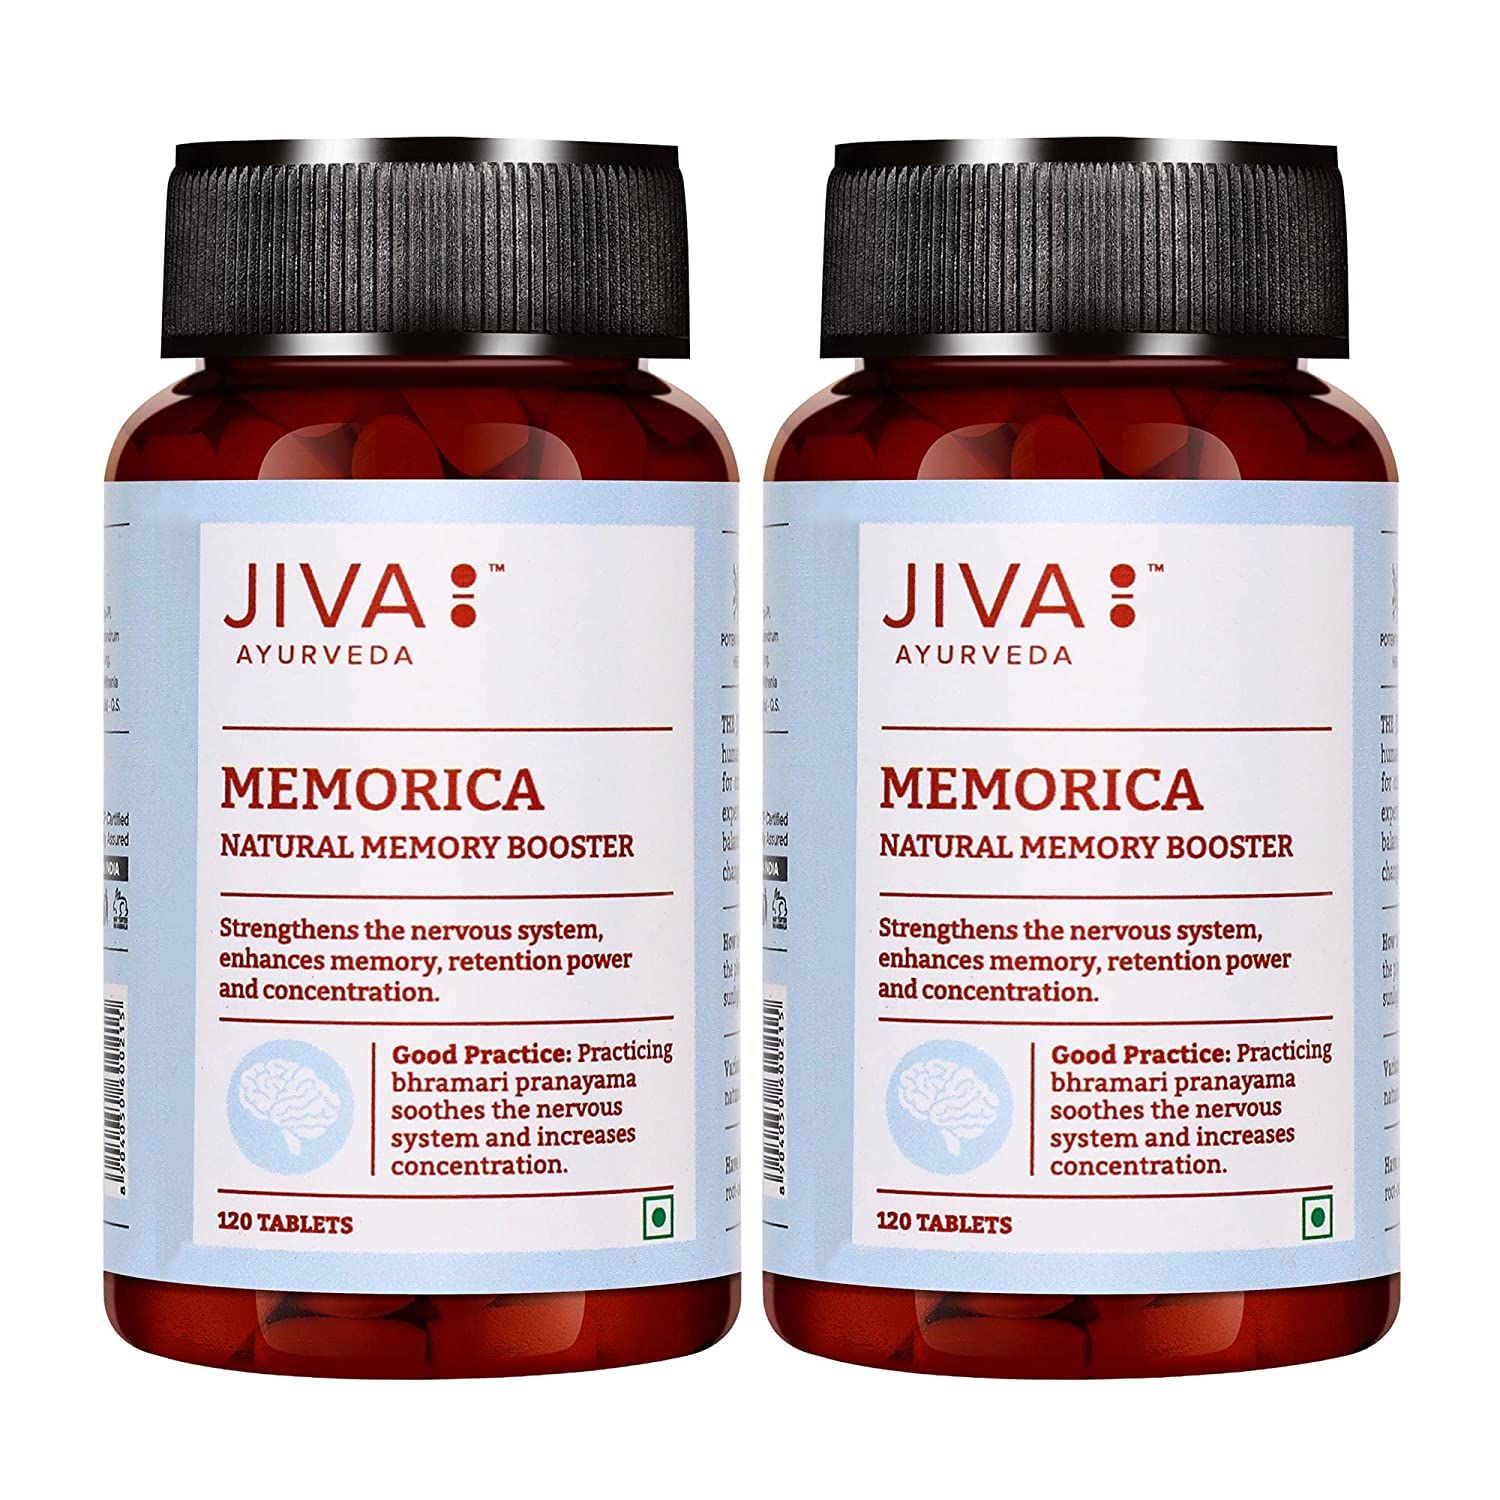 Buy Jiva Ayurveda Memorica 120 Tablets at Best Price Online